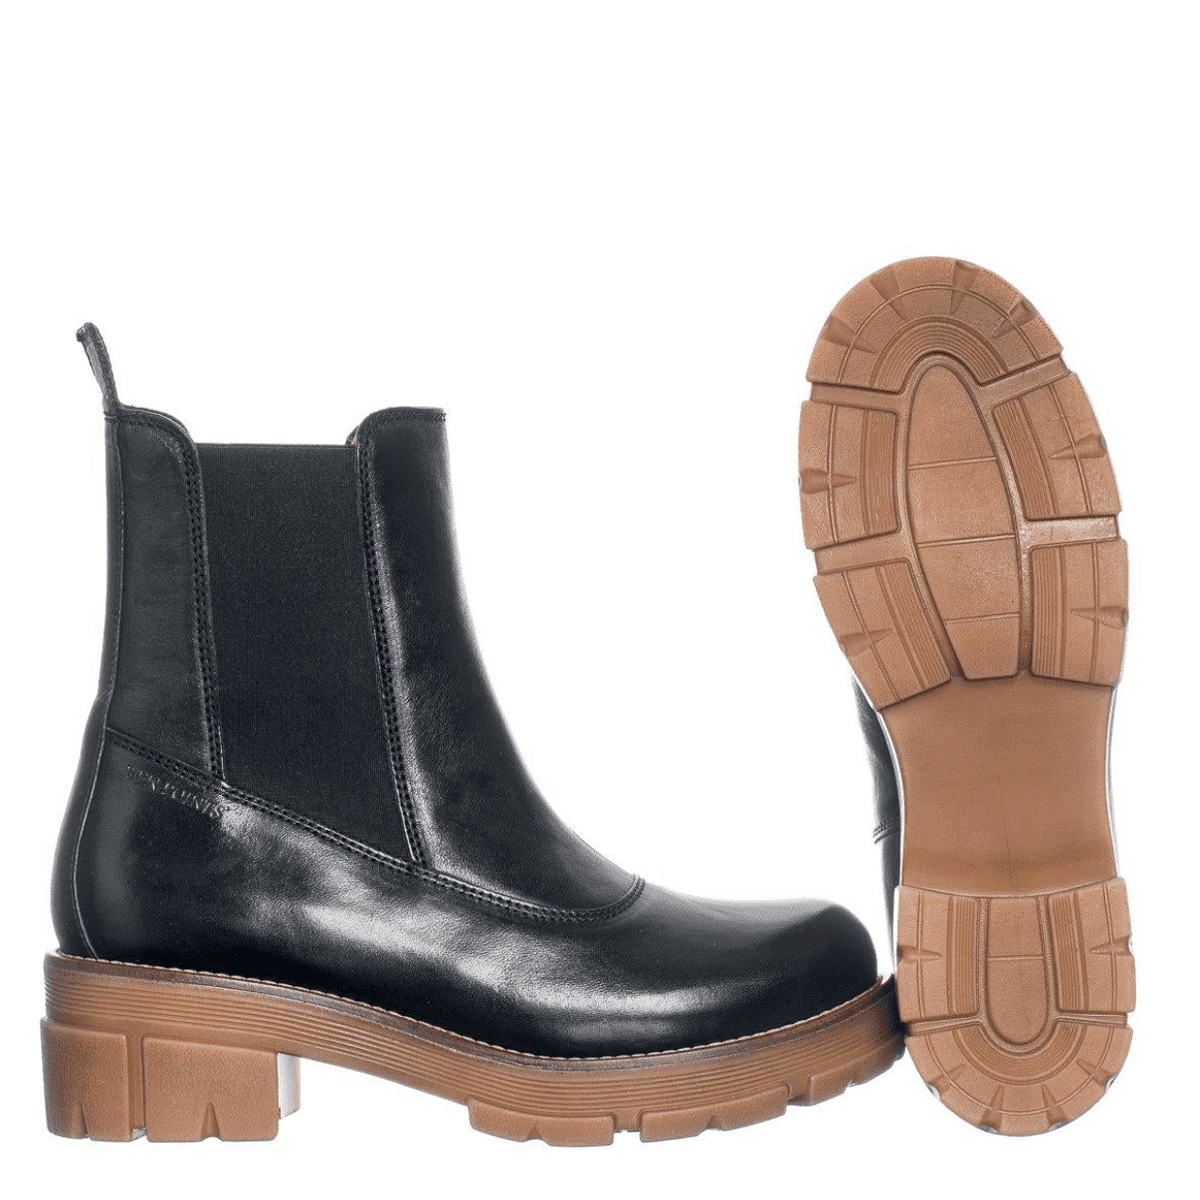 Leather Chelsea boots, Cecilia